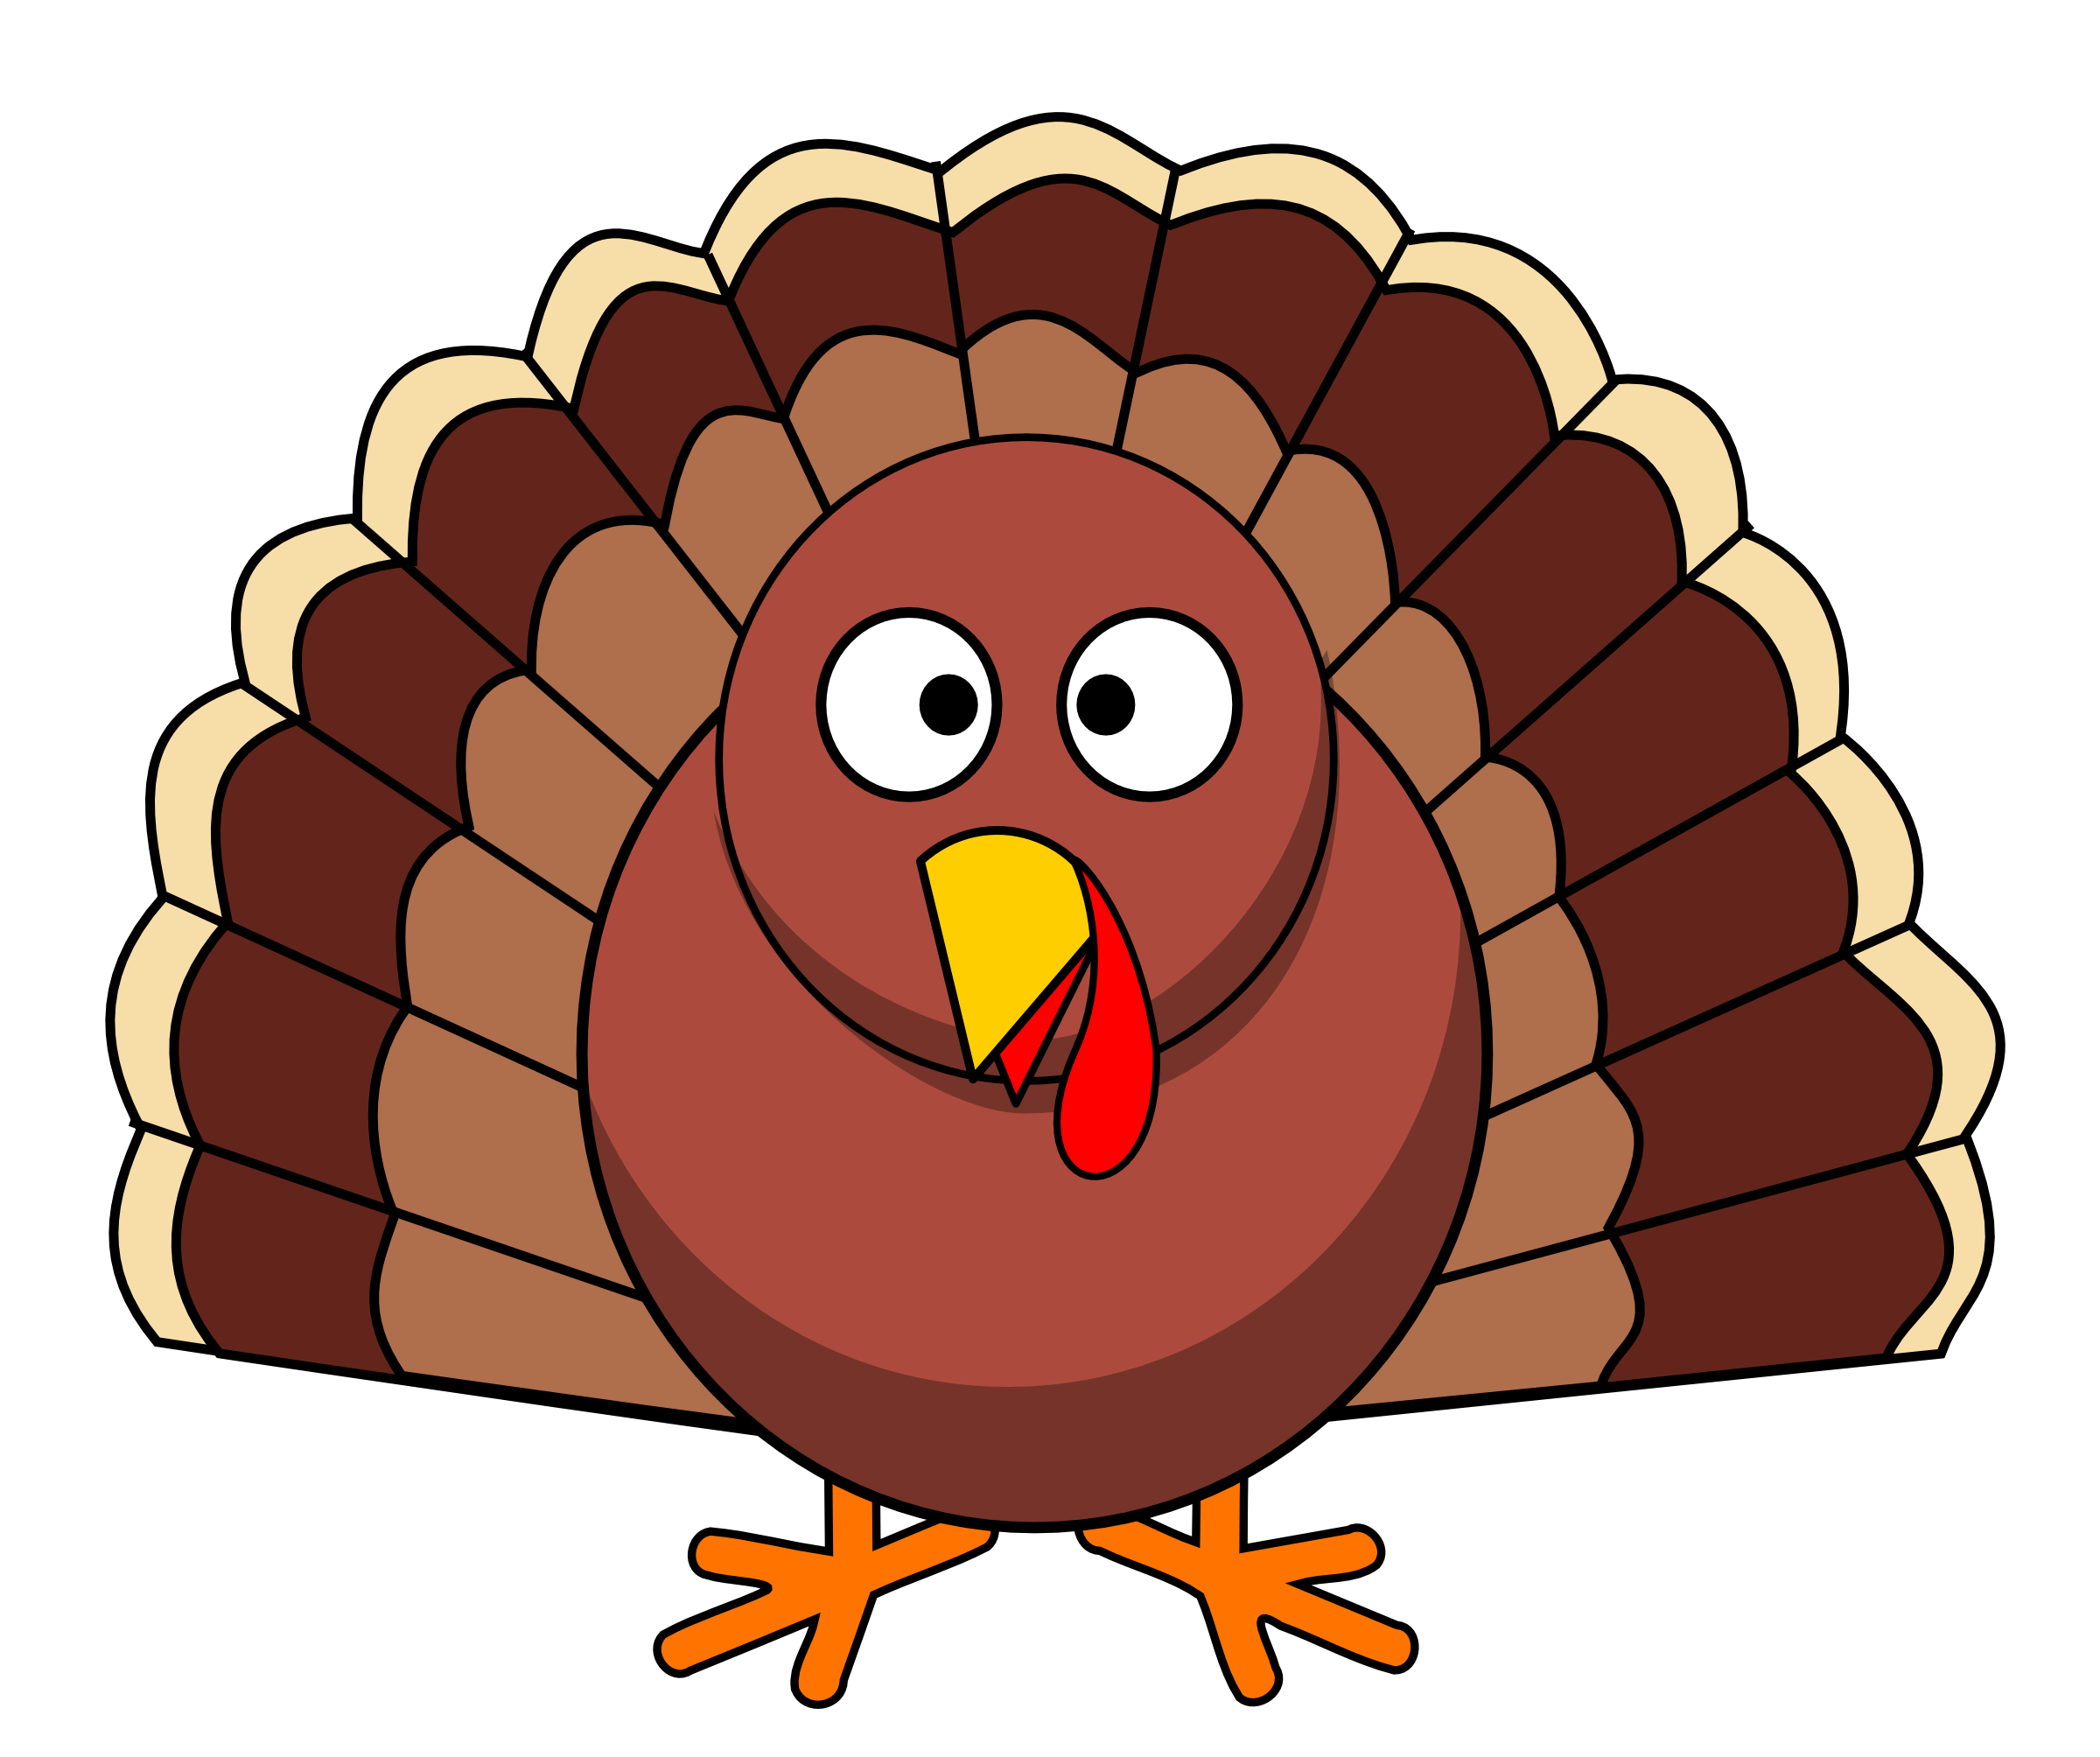 Clipart turkey pop art. Images of turkeys for